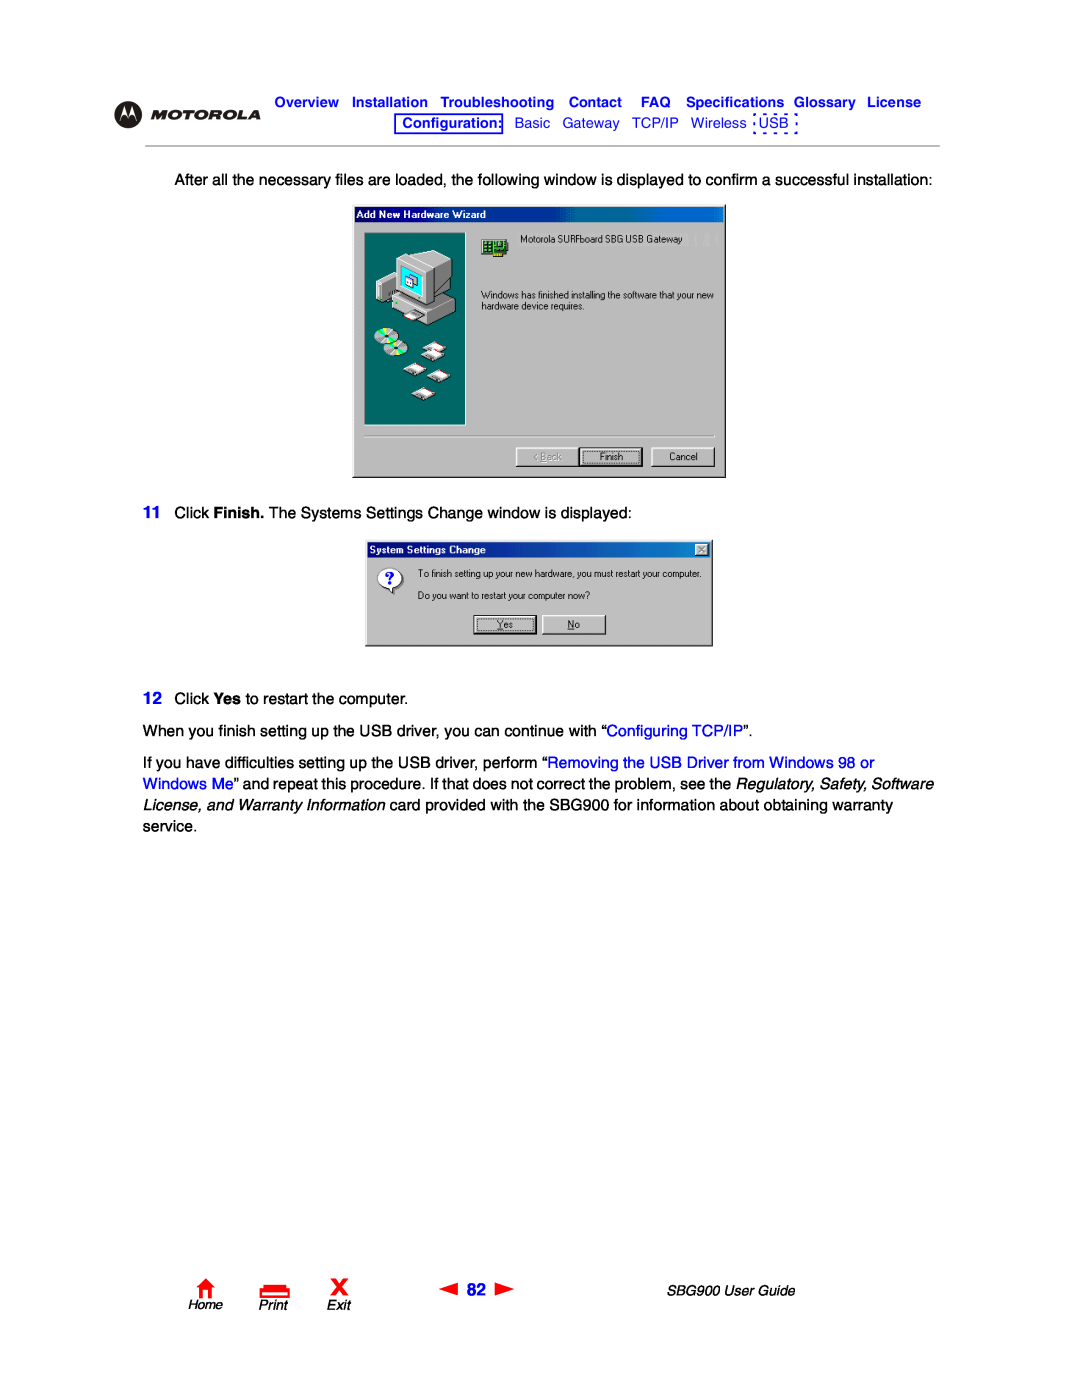 Motorola SBG900 manual Click Finish. The Systems Settings Change window is displayed 